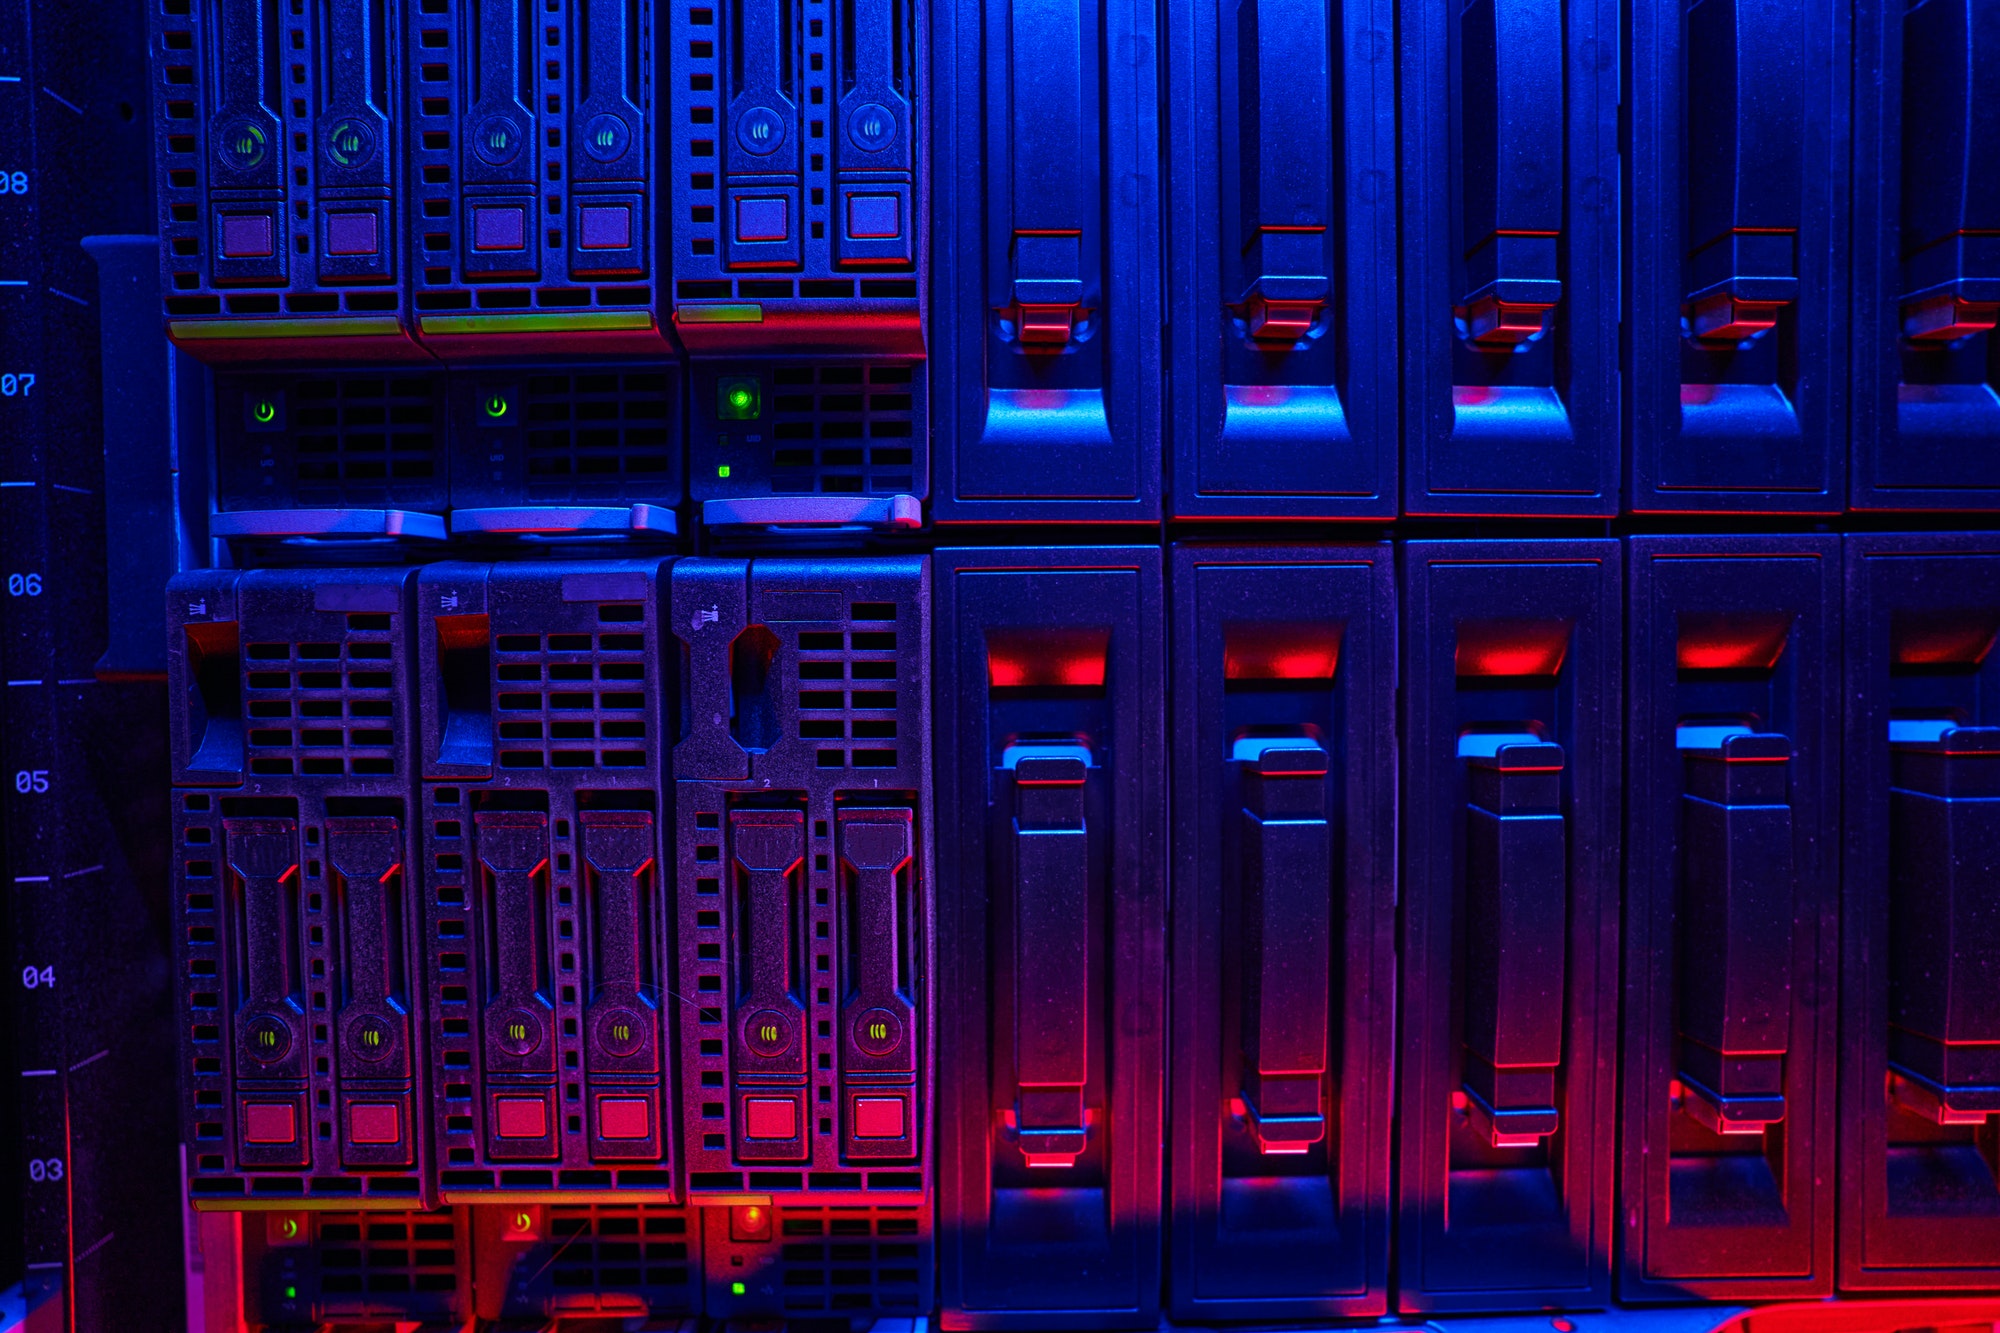 Modern high tech telecommunications operational super computer in server room